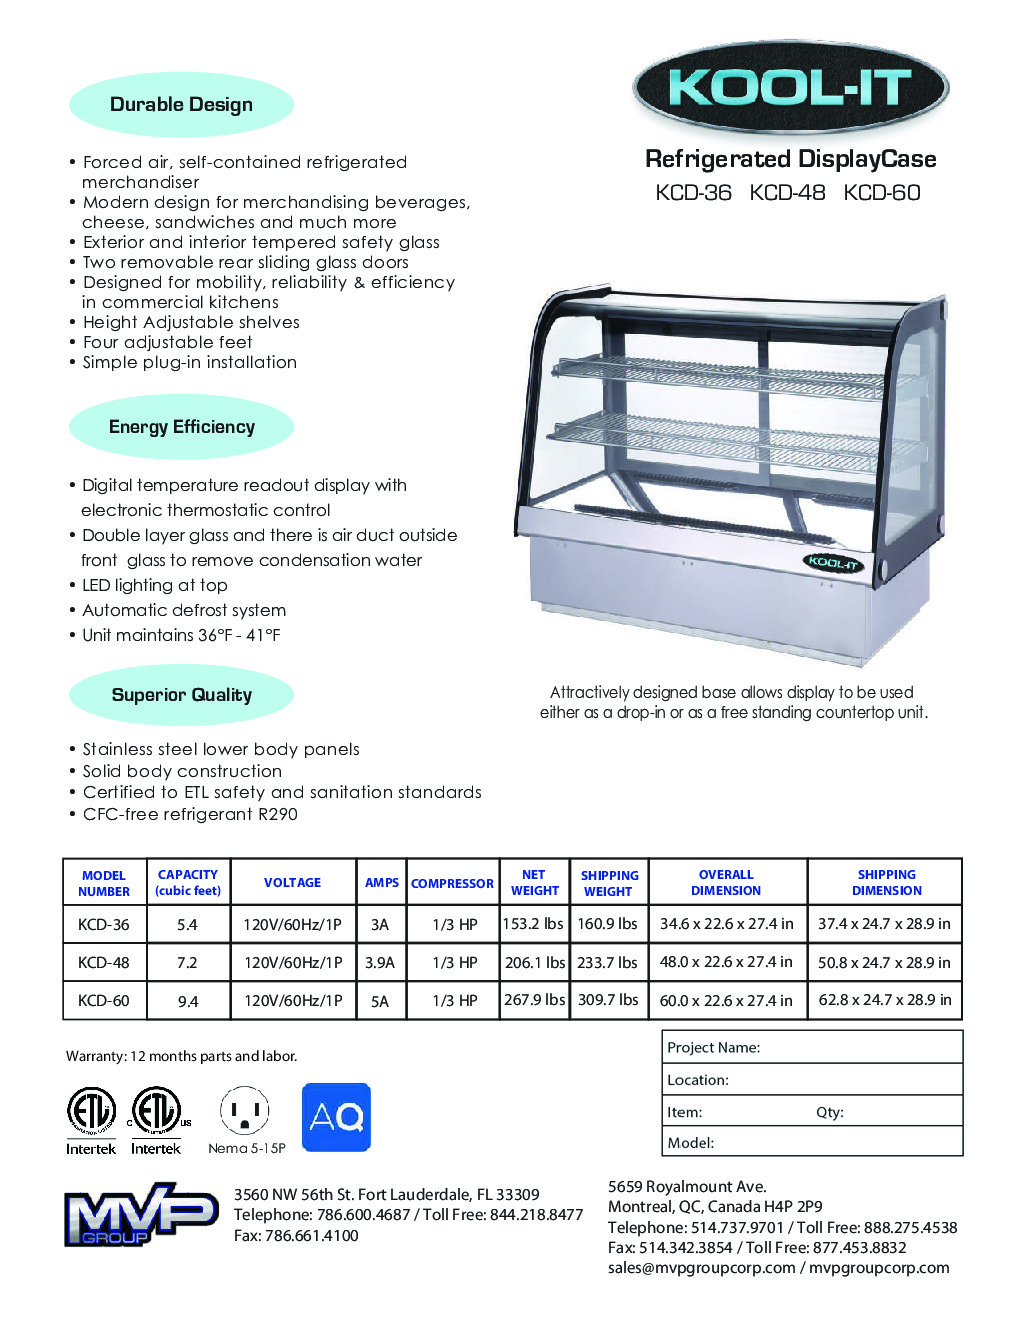 Kool-It KCD-60 Countertop Refrigerated Deli Display Case